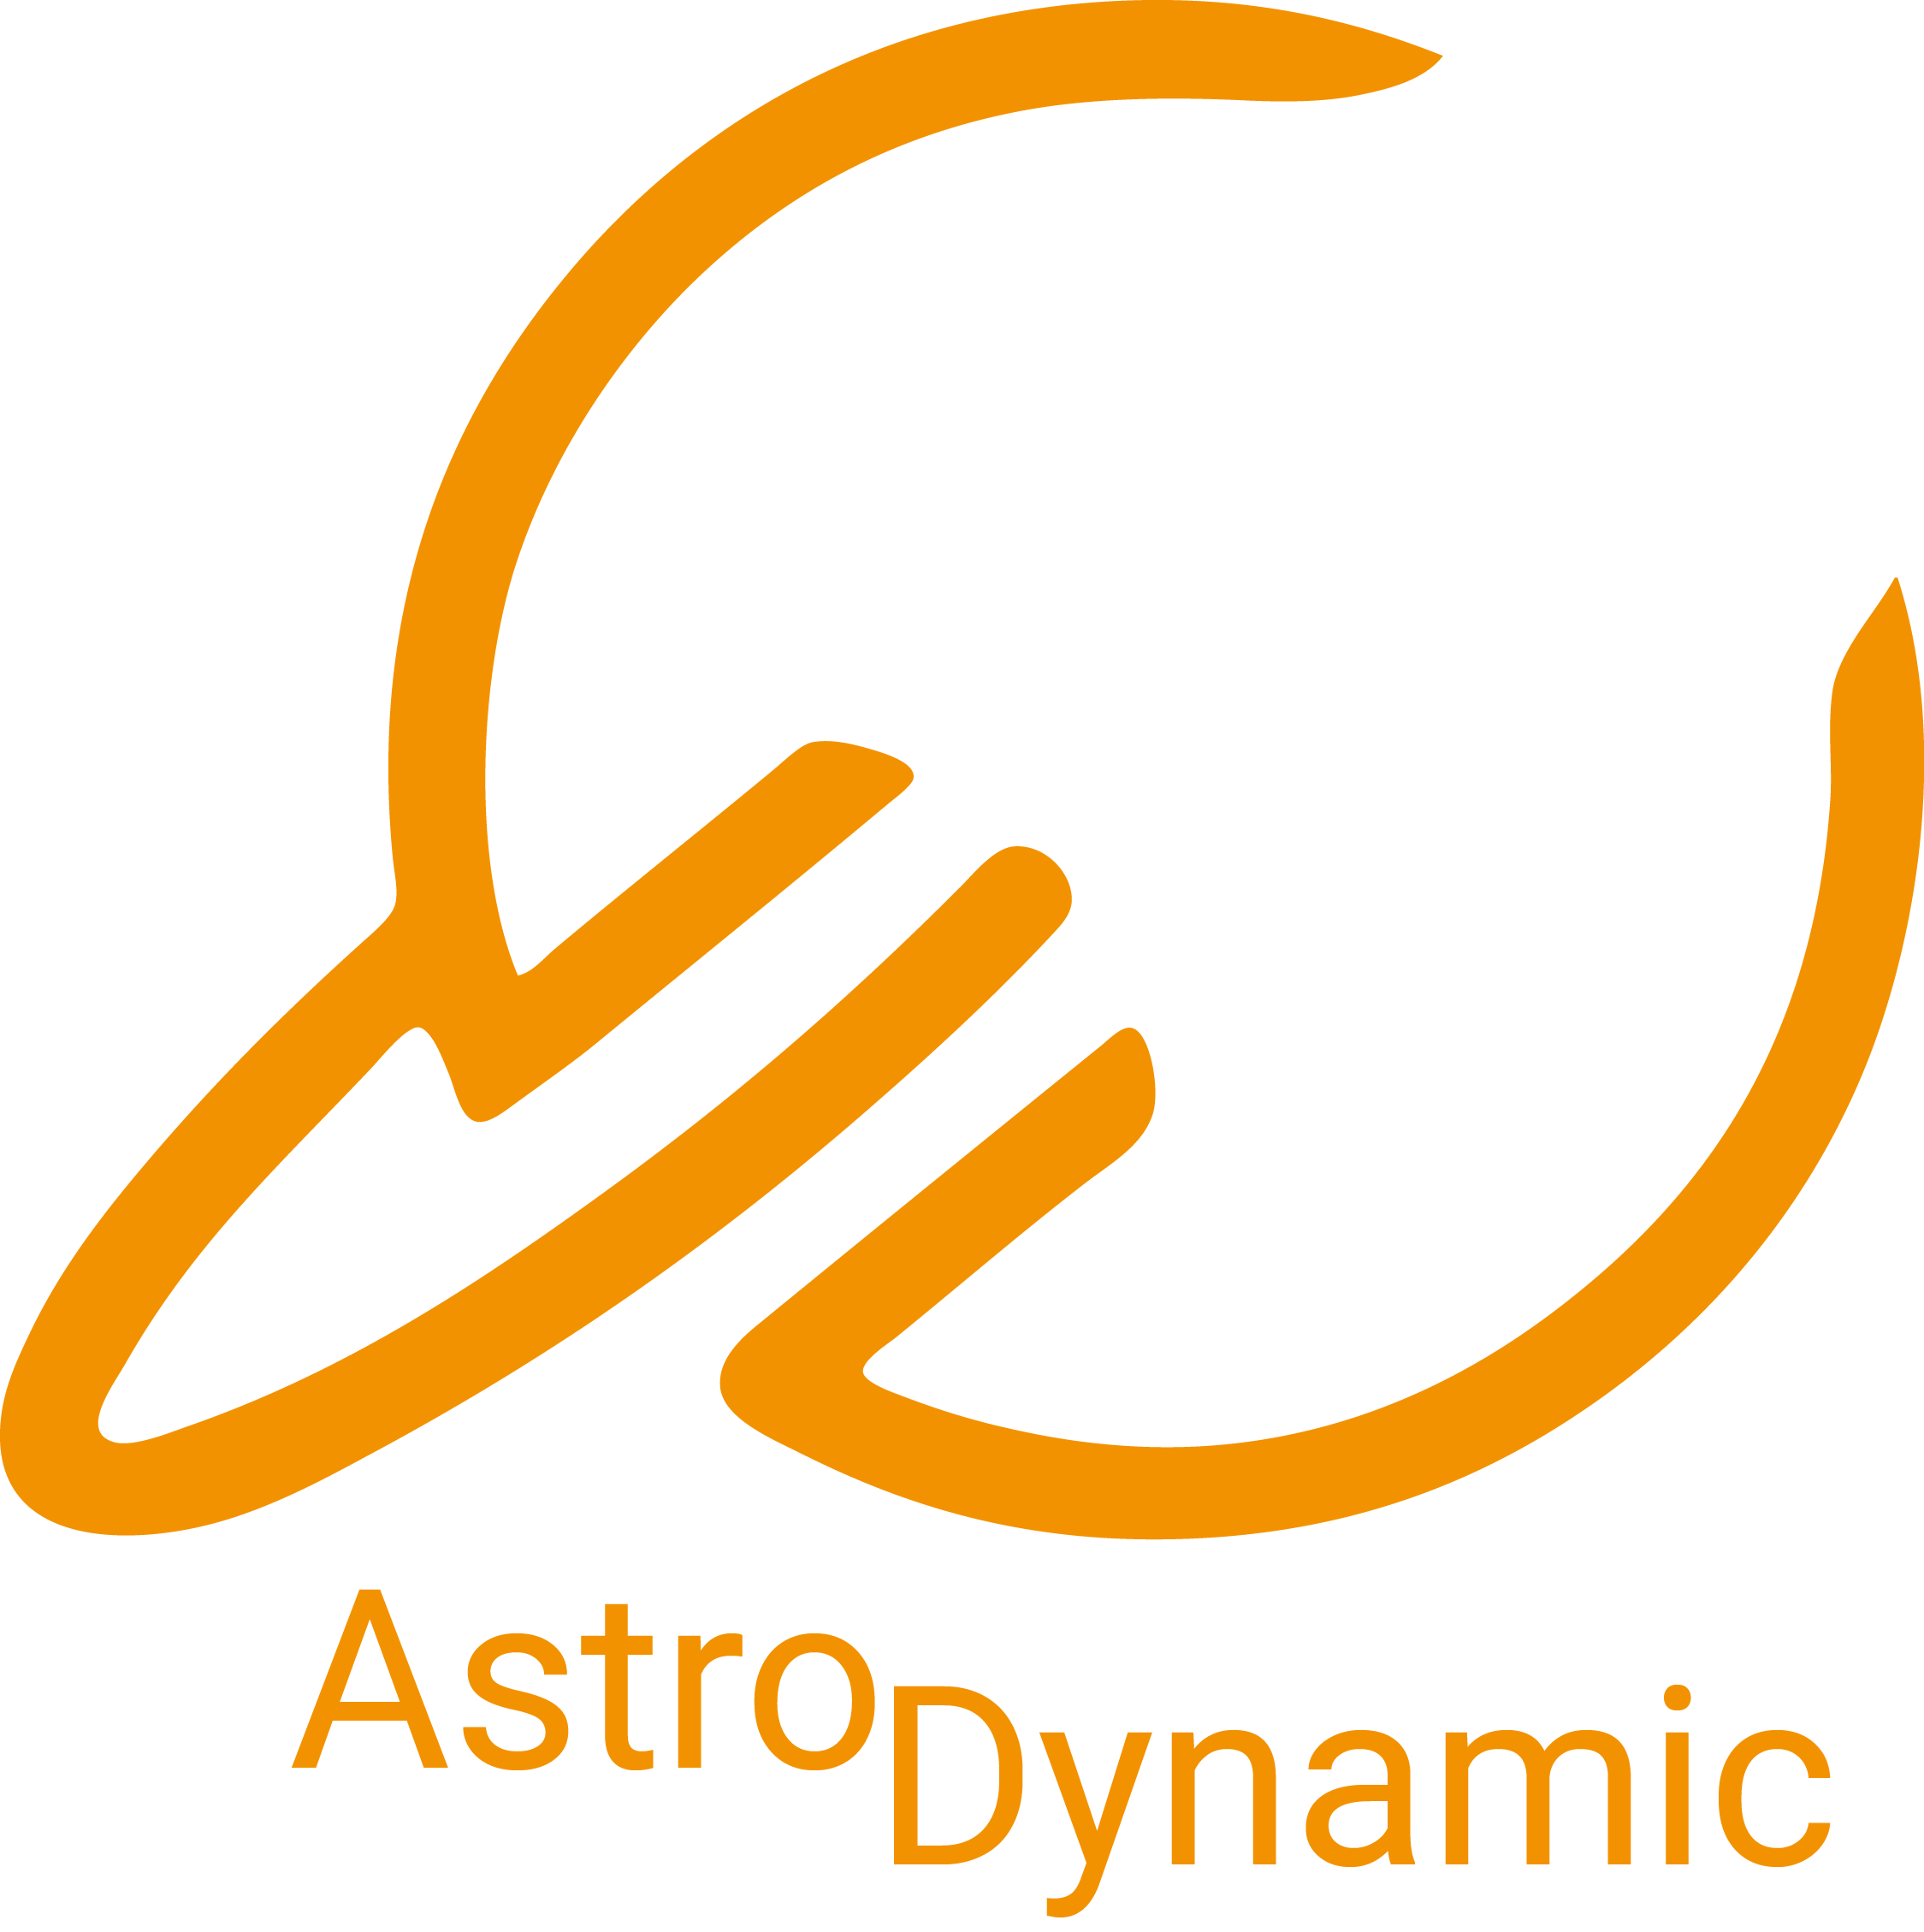 Astro Dynamic Ltd